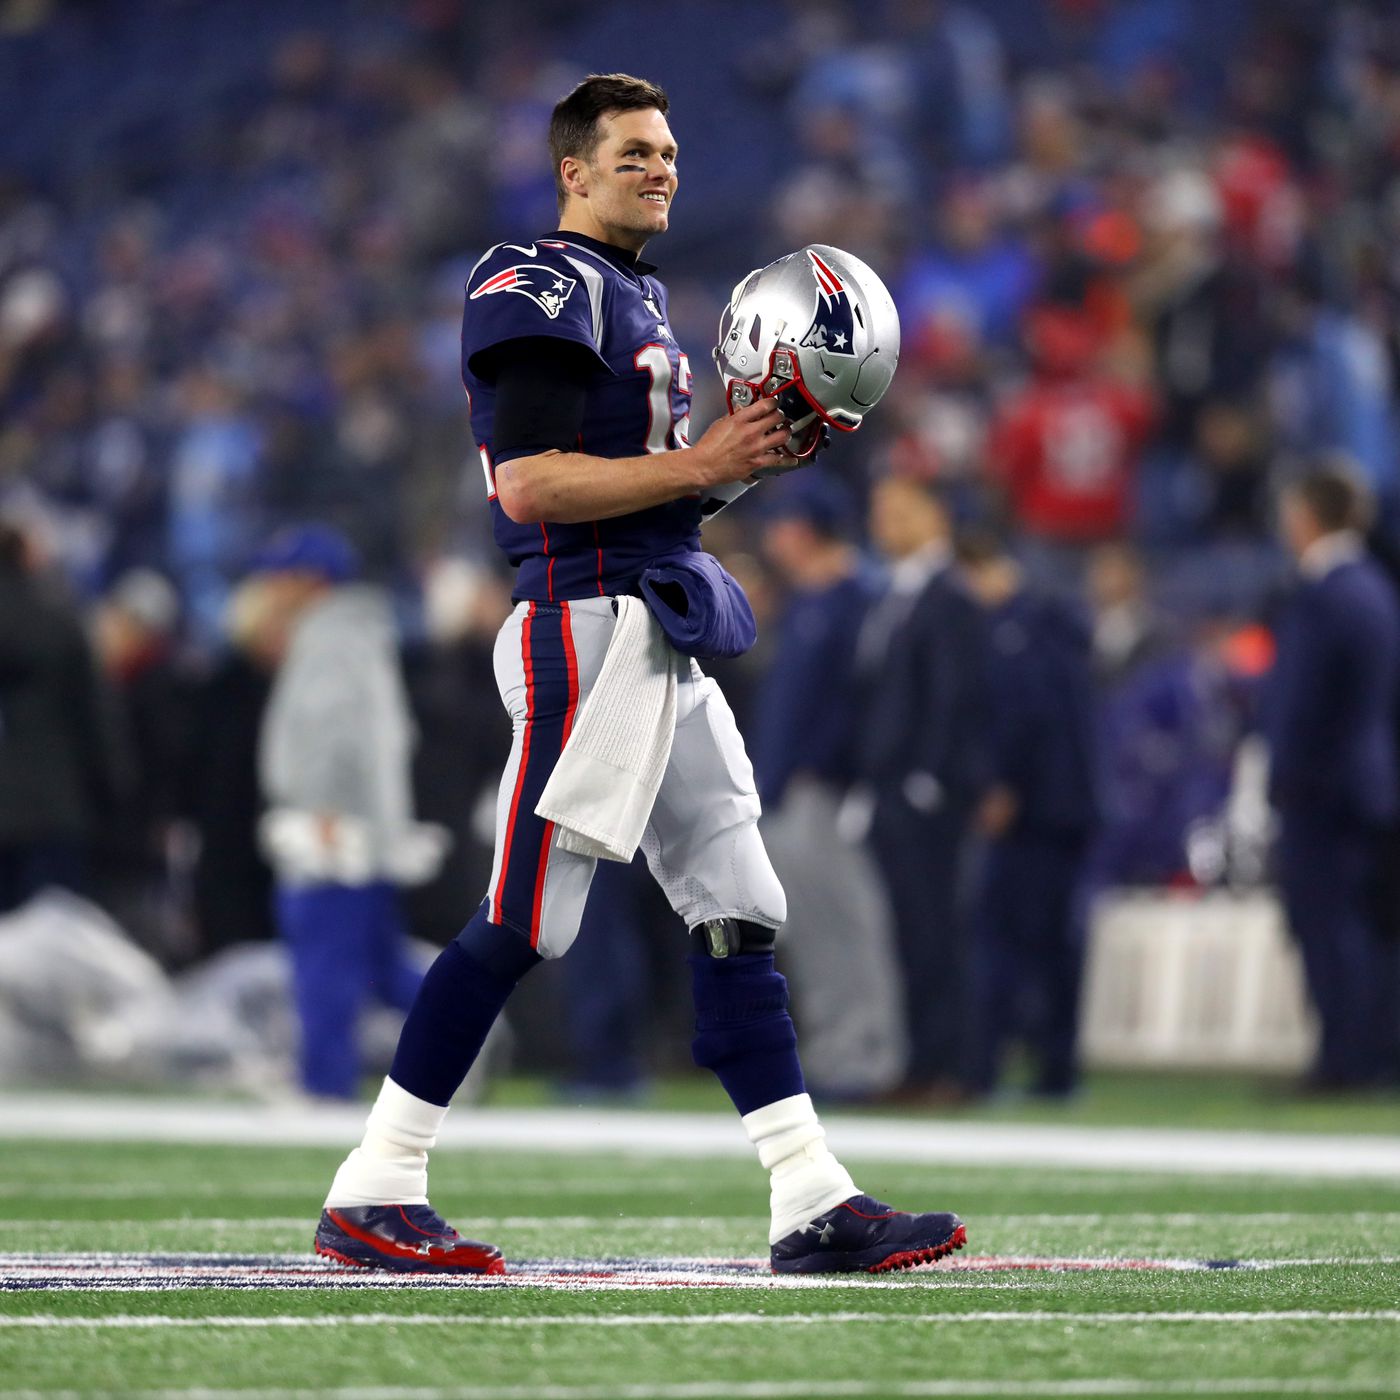 Super Bowl losses to Giants still haunt Patriots QB Tom Brady